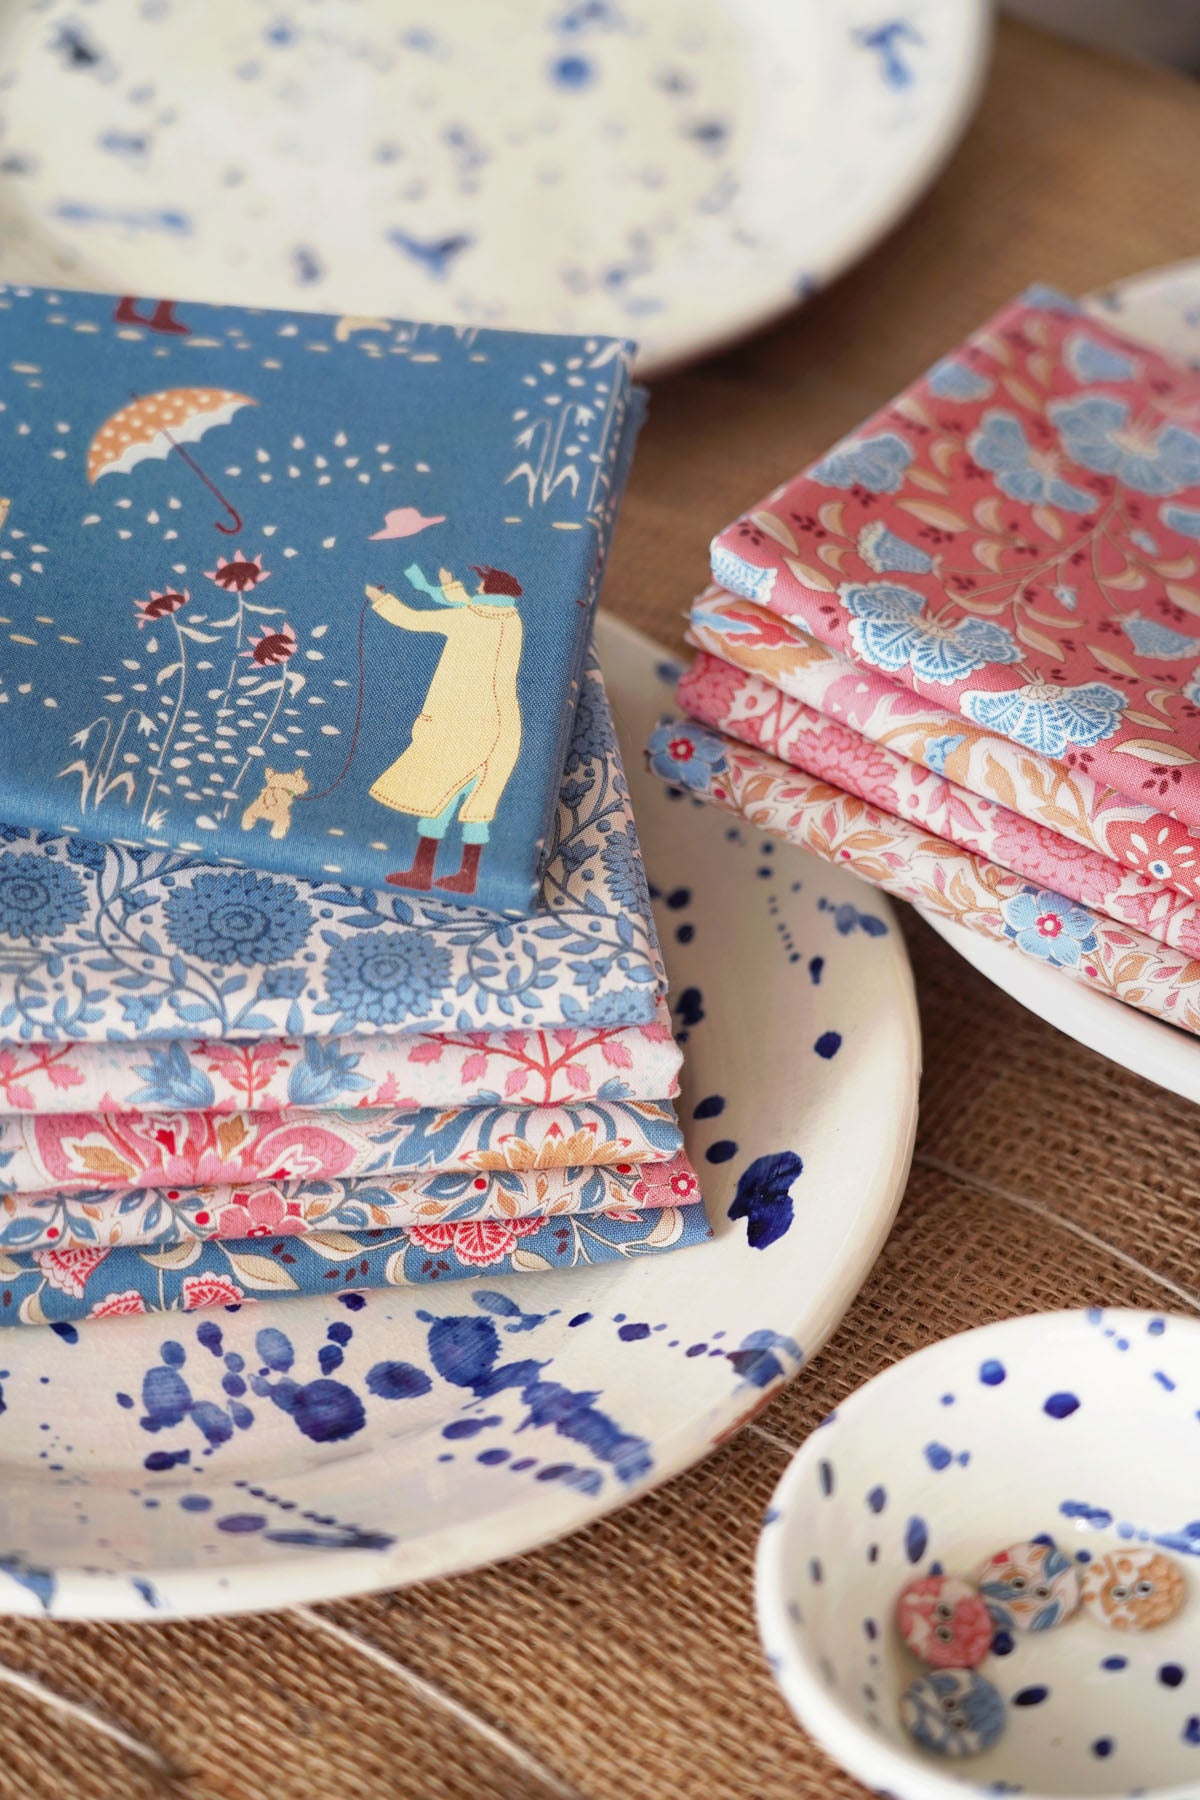 Windy Days Collection Blue Fat Quarter Bundle by Tilda fabrics | TIL300113